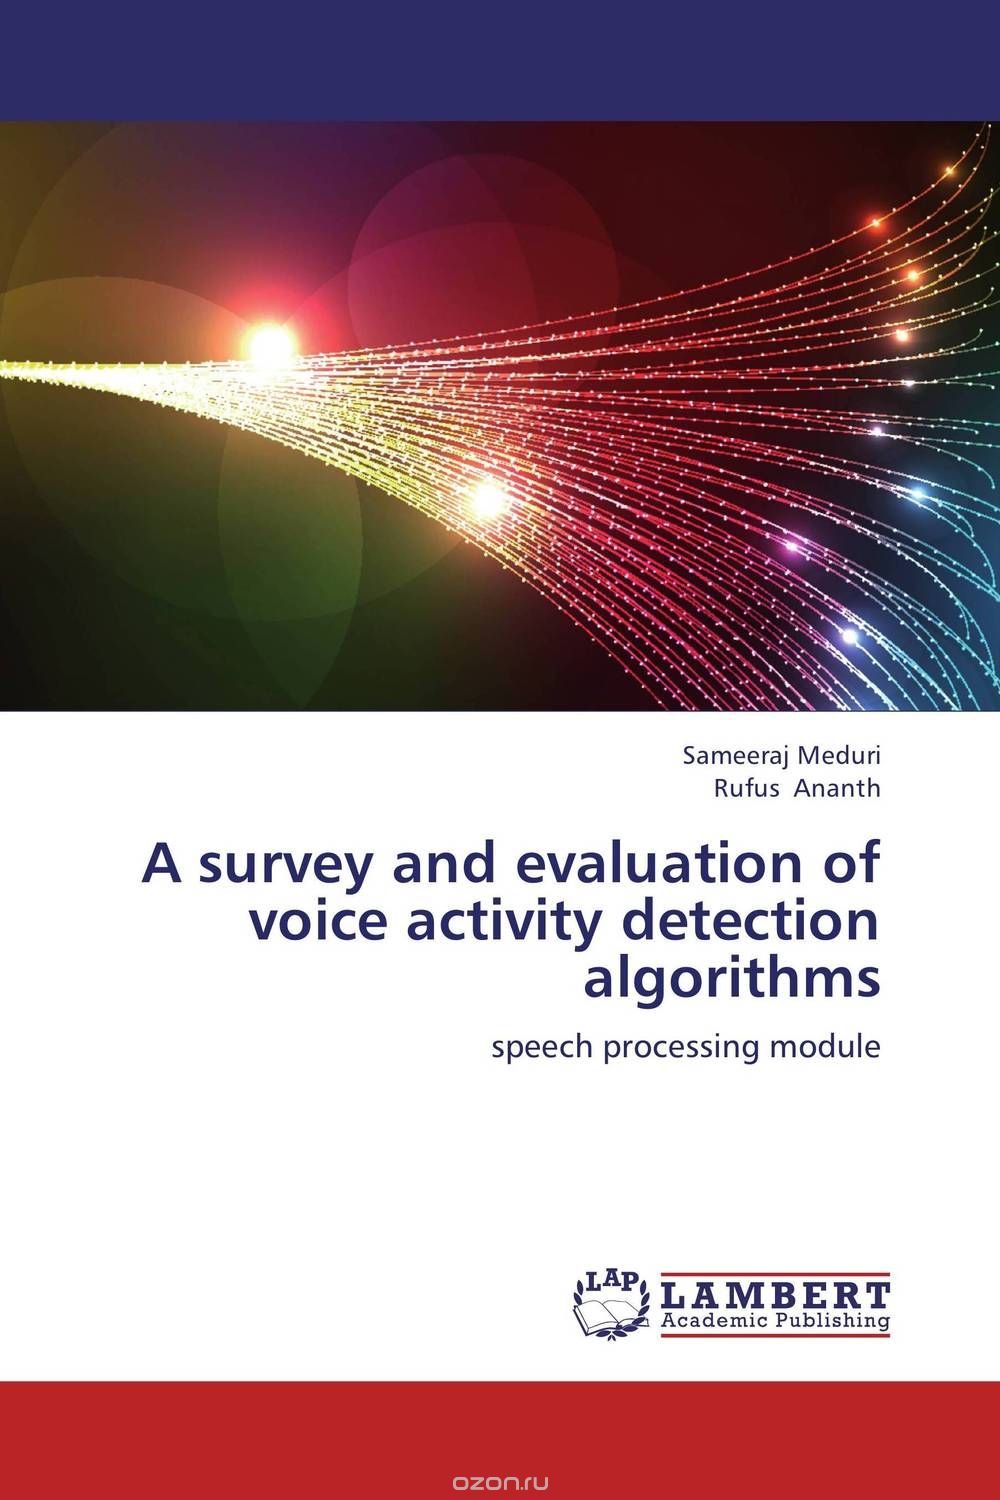 Скачать книгу "A survey and evaluation of voice activity detection algorithms"